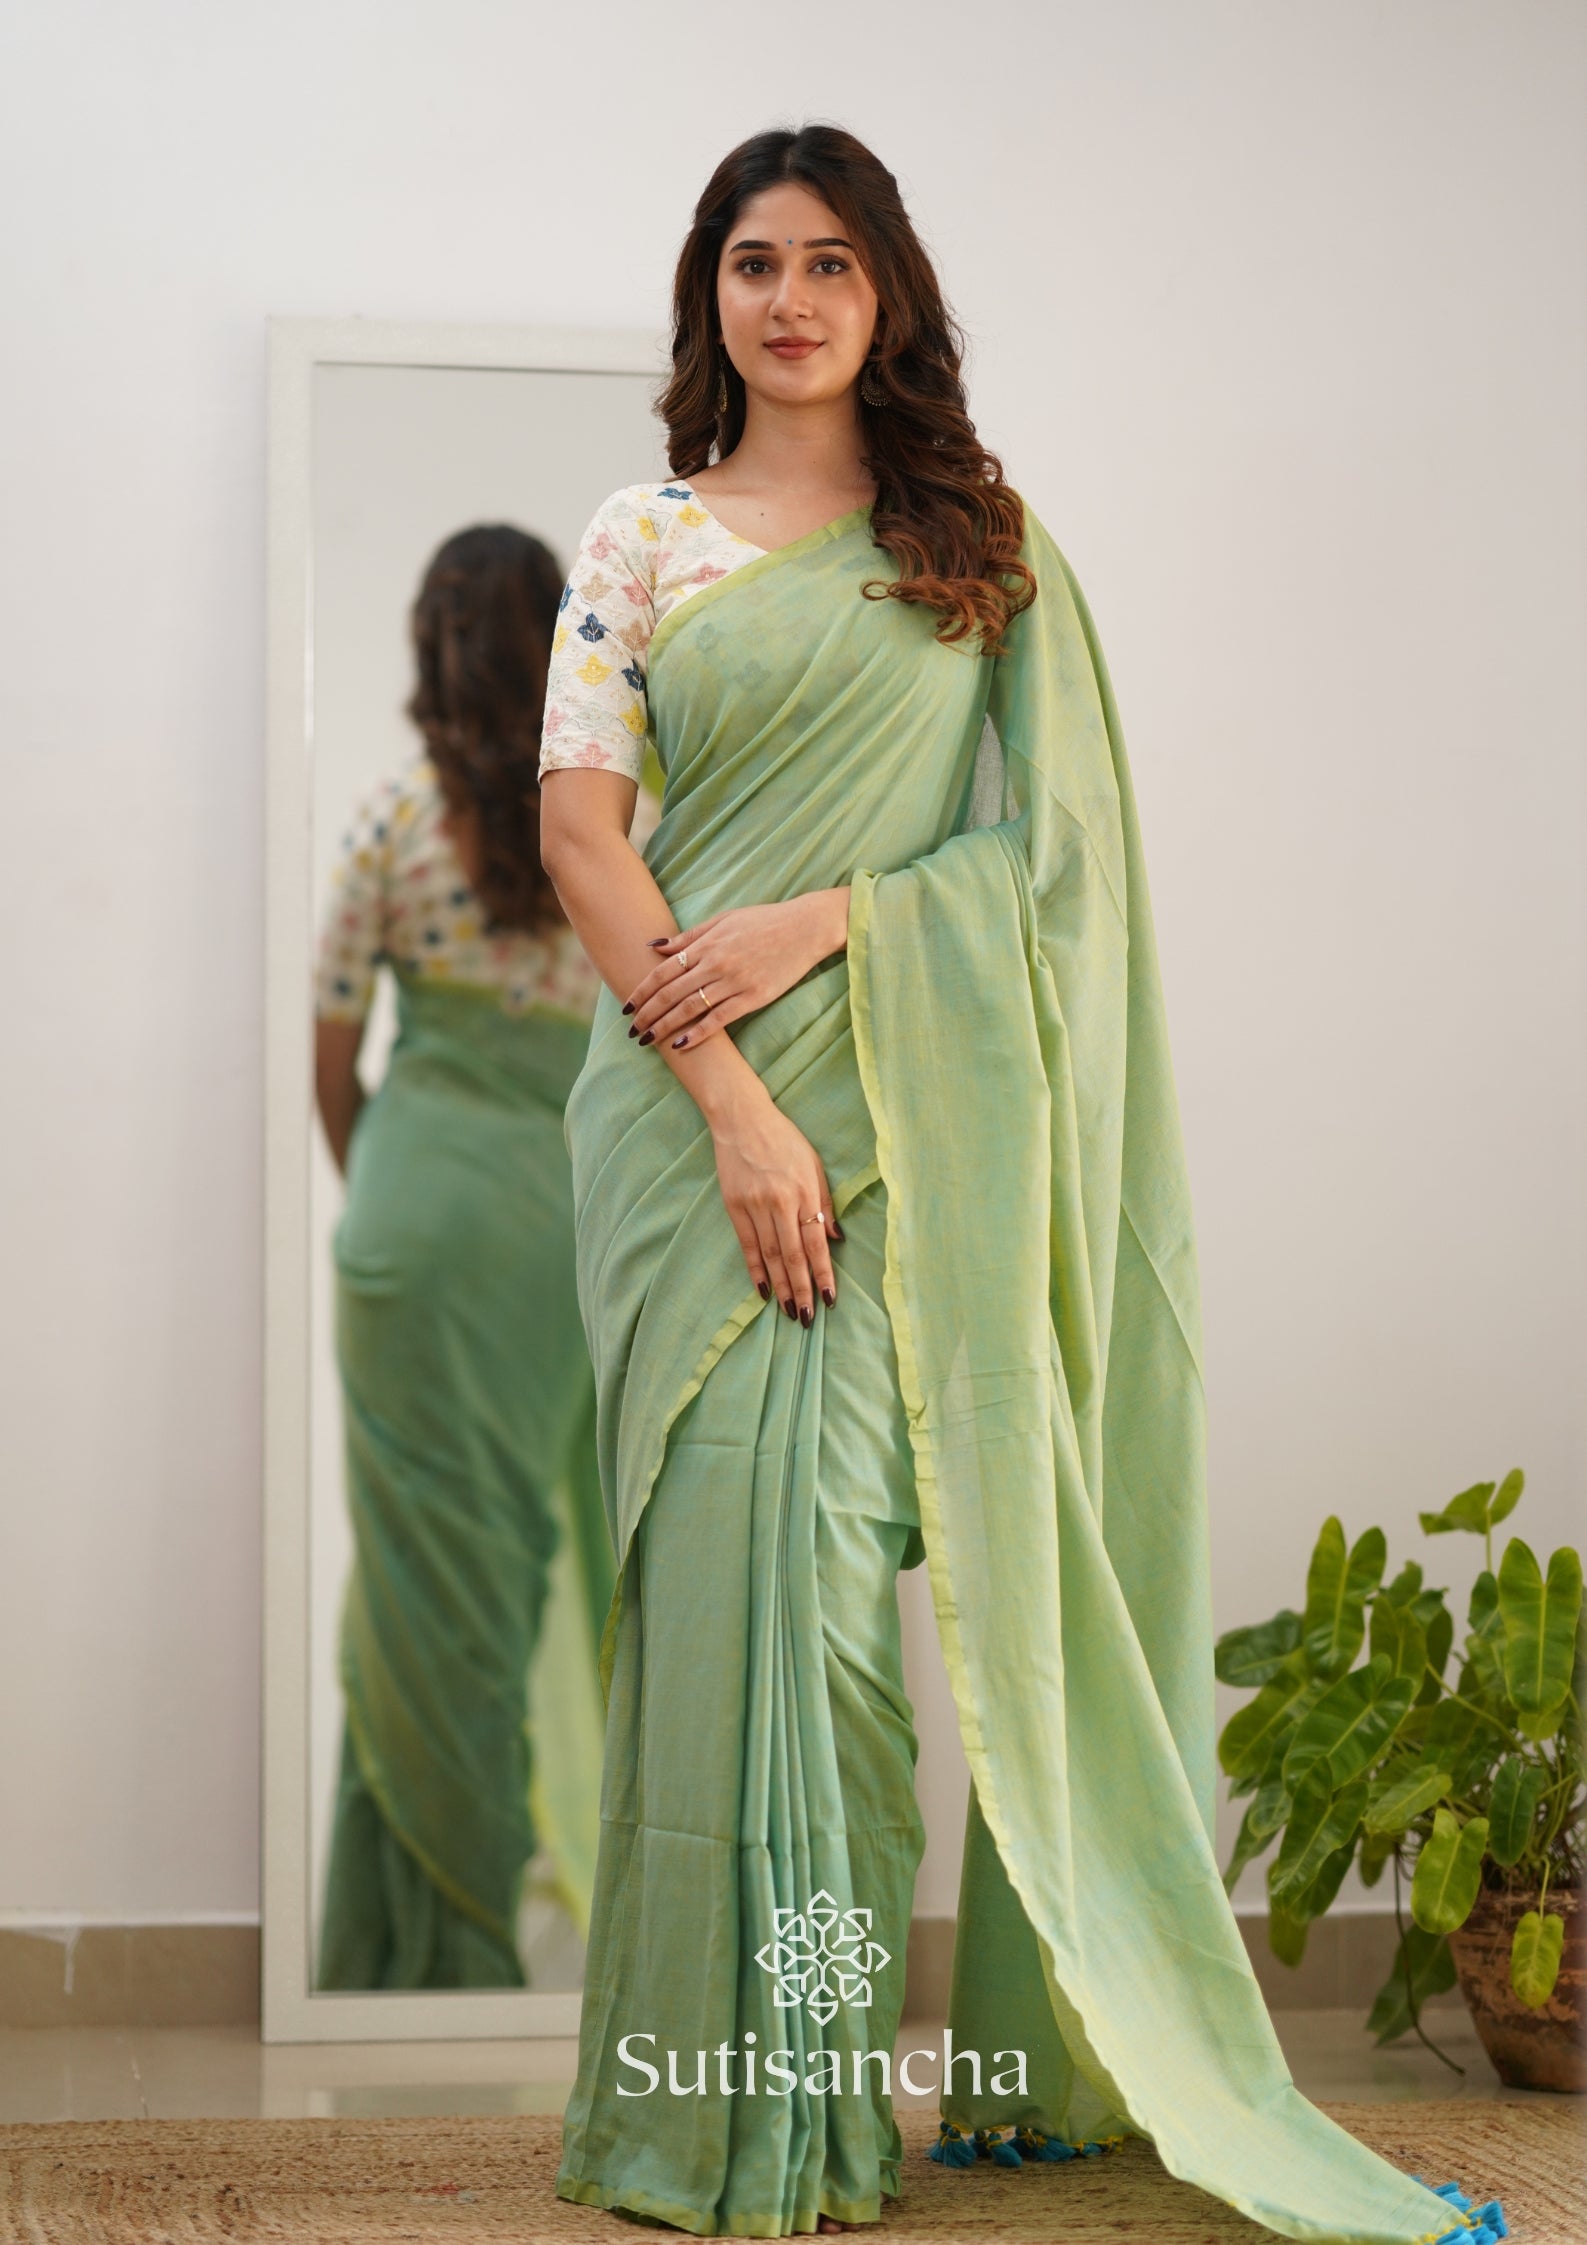 Sutisancha Pistachio Green Handloom Cotton Saree With Designer Blouse